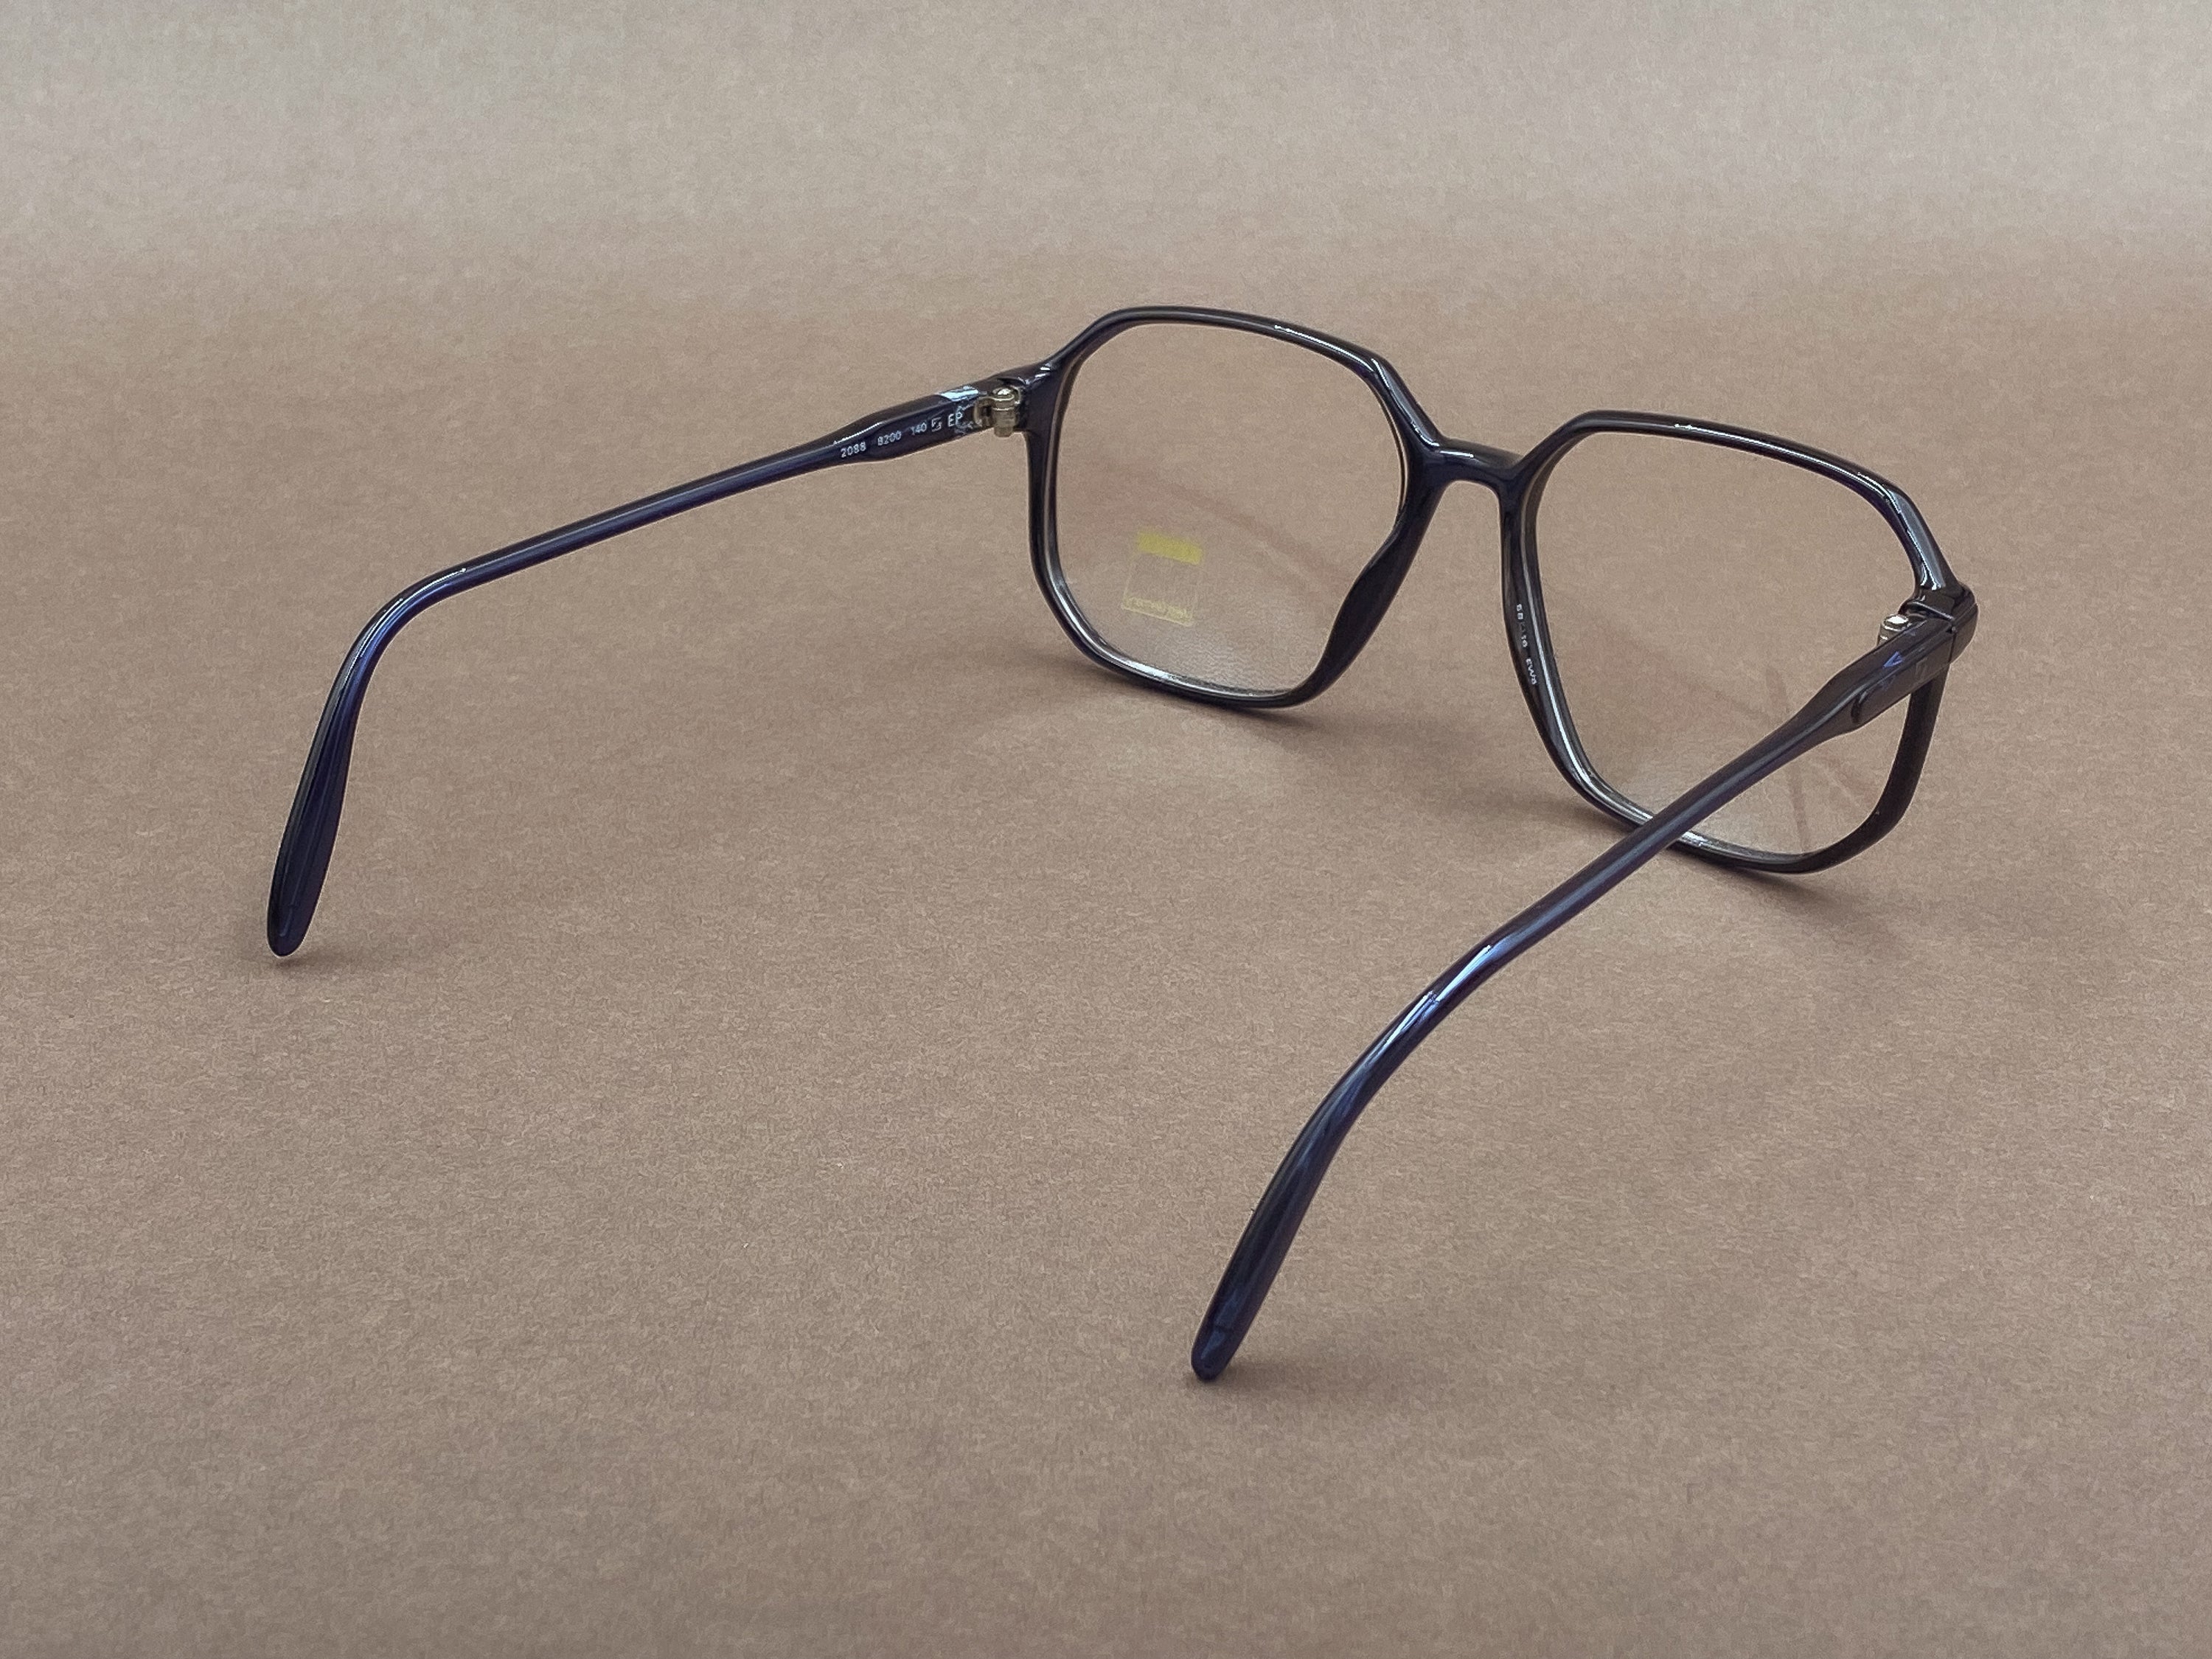 Zeiss 2088 eyeglasses